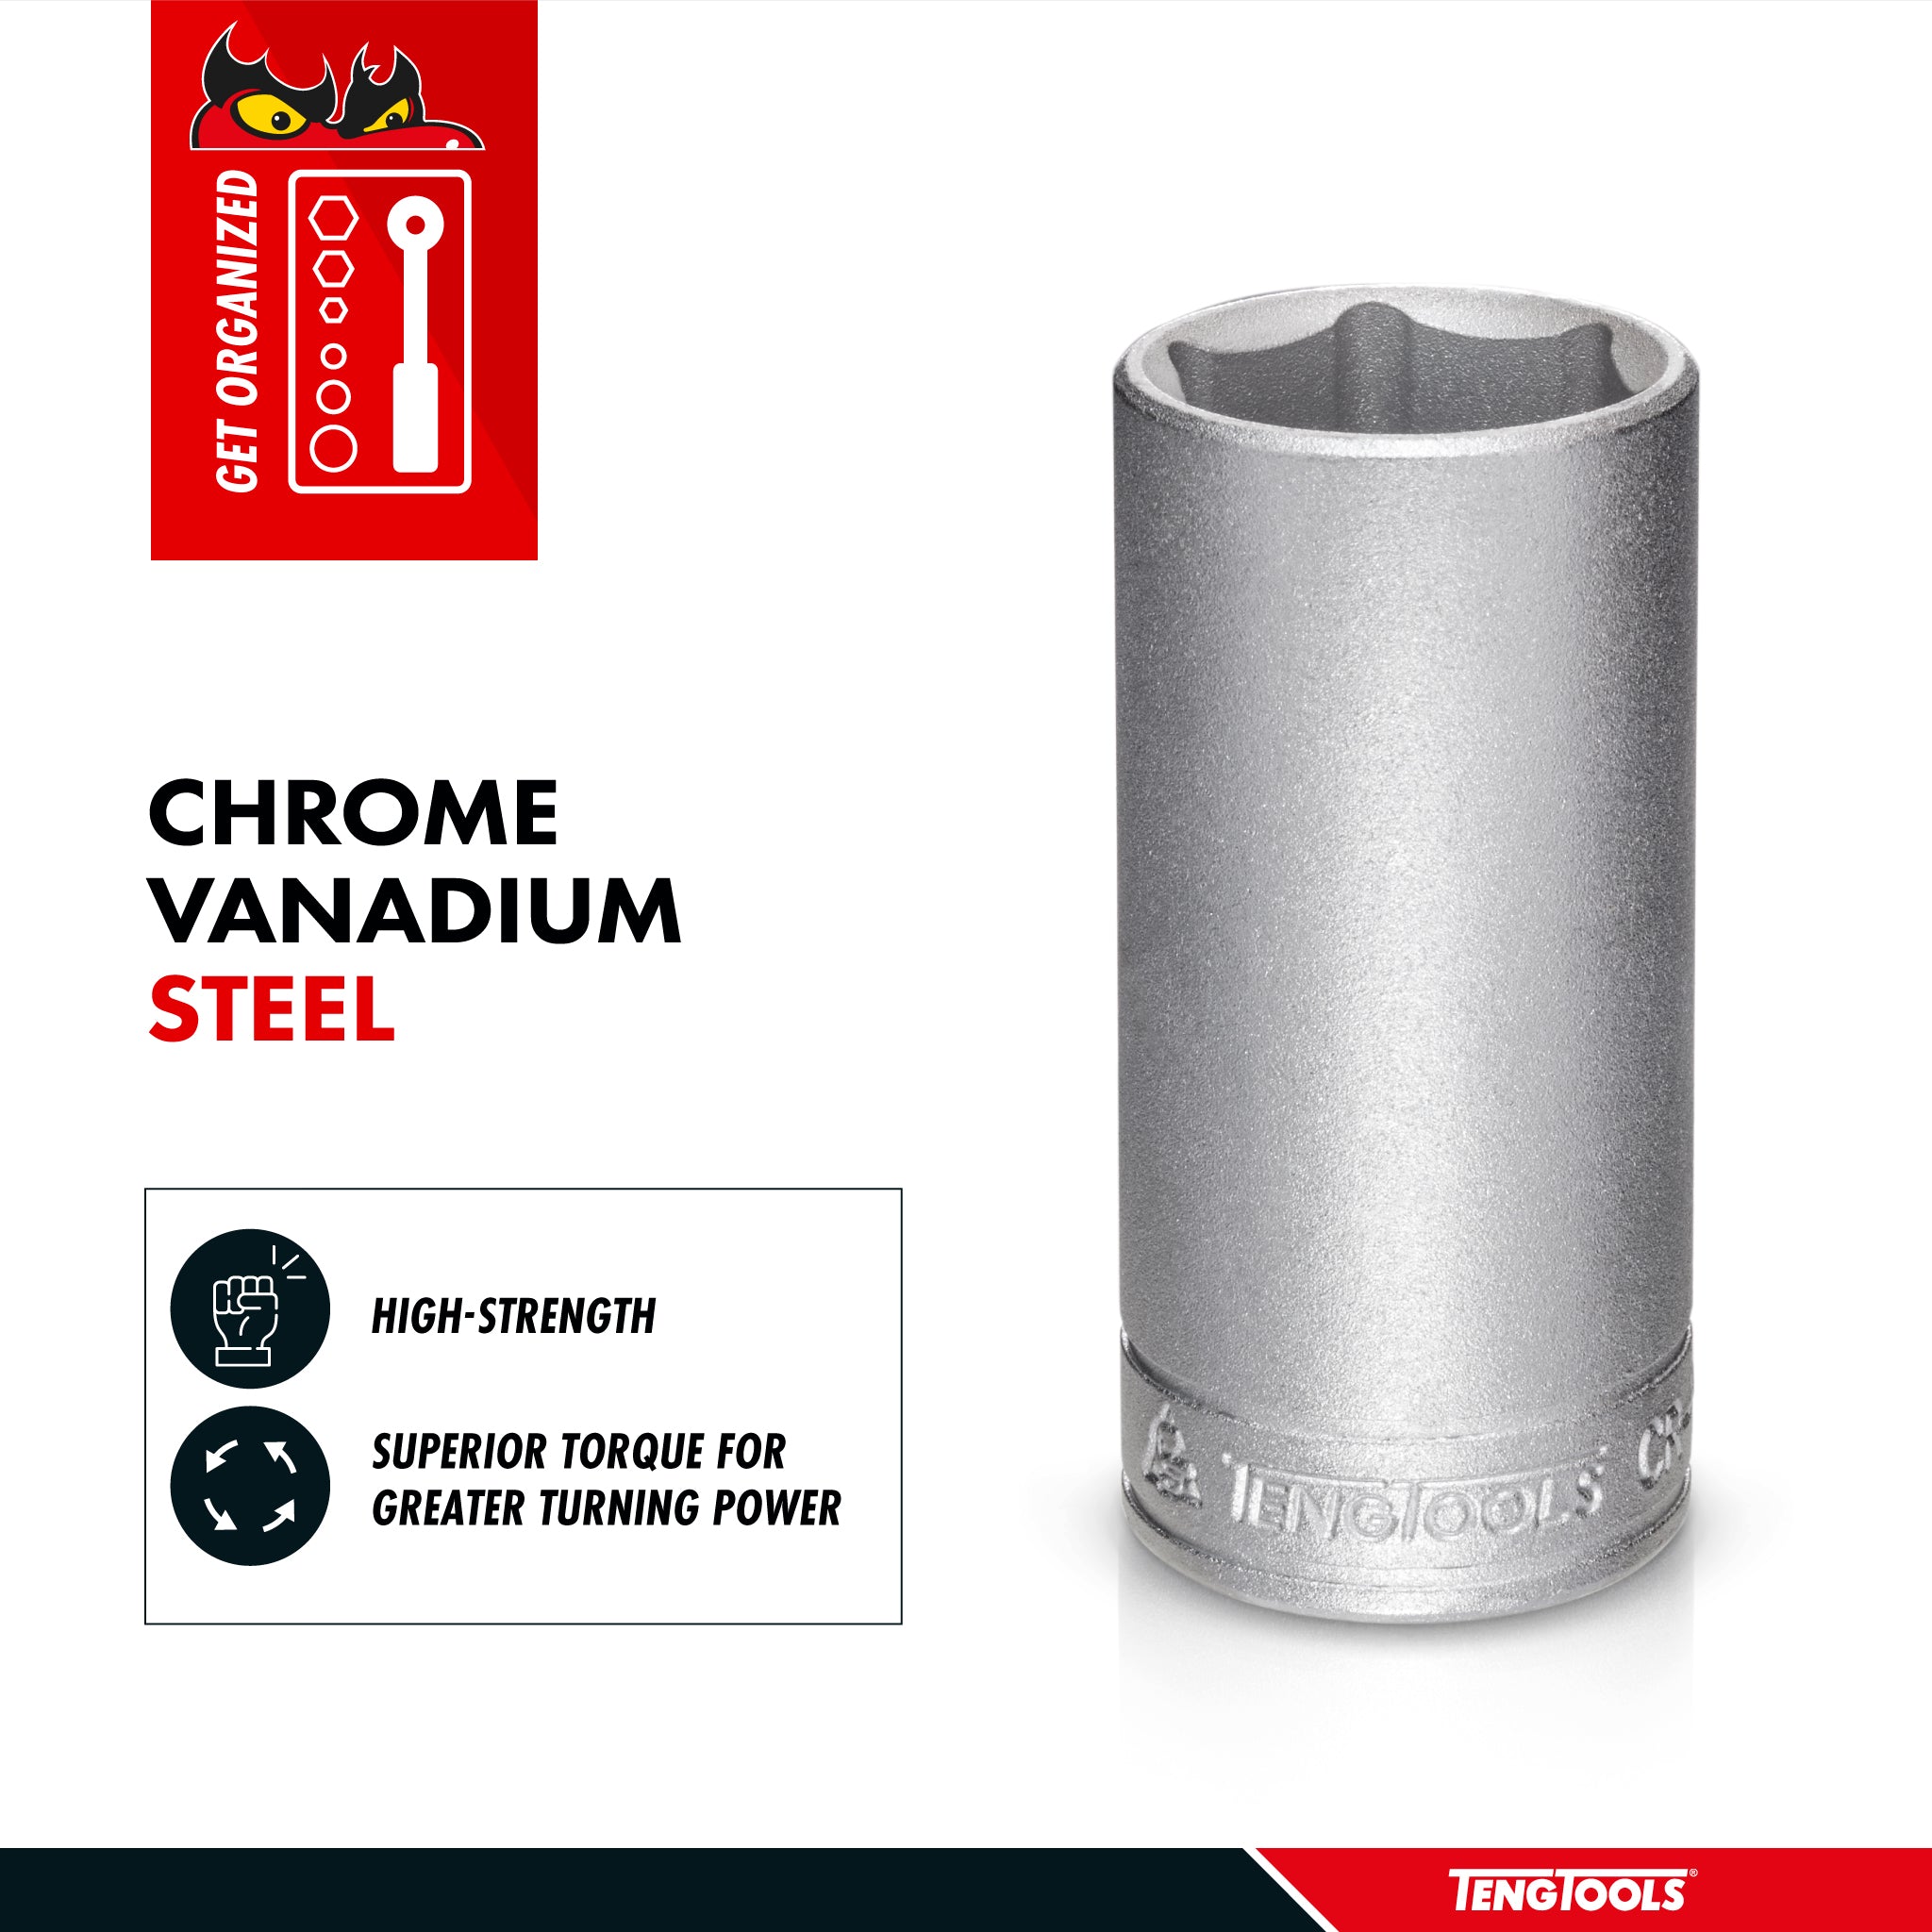 Teng Tools 1/4 Inch Drive 6 Point Metric Deep Chrome Vanadium Sockets - 5mm